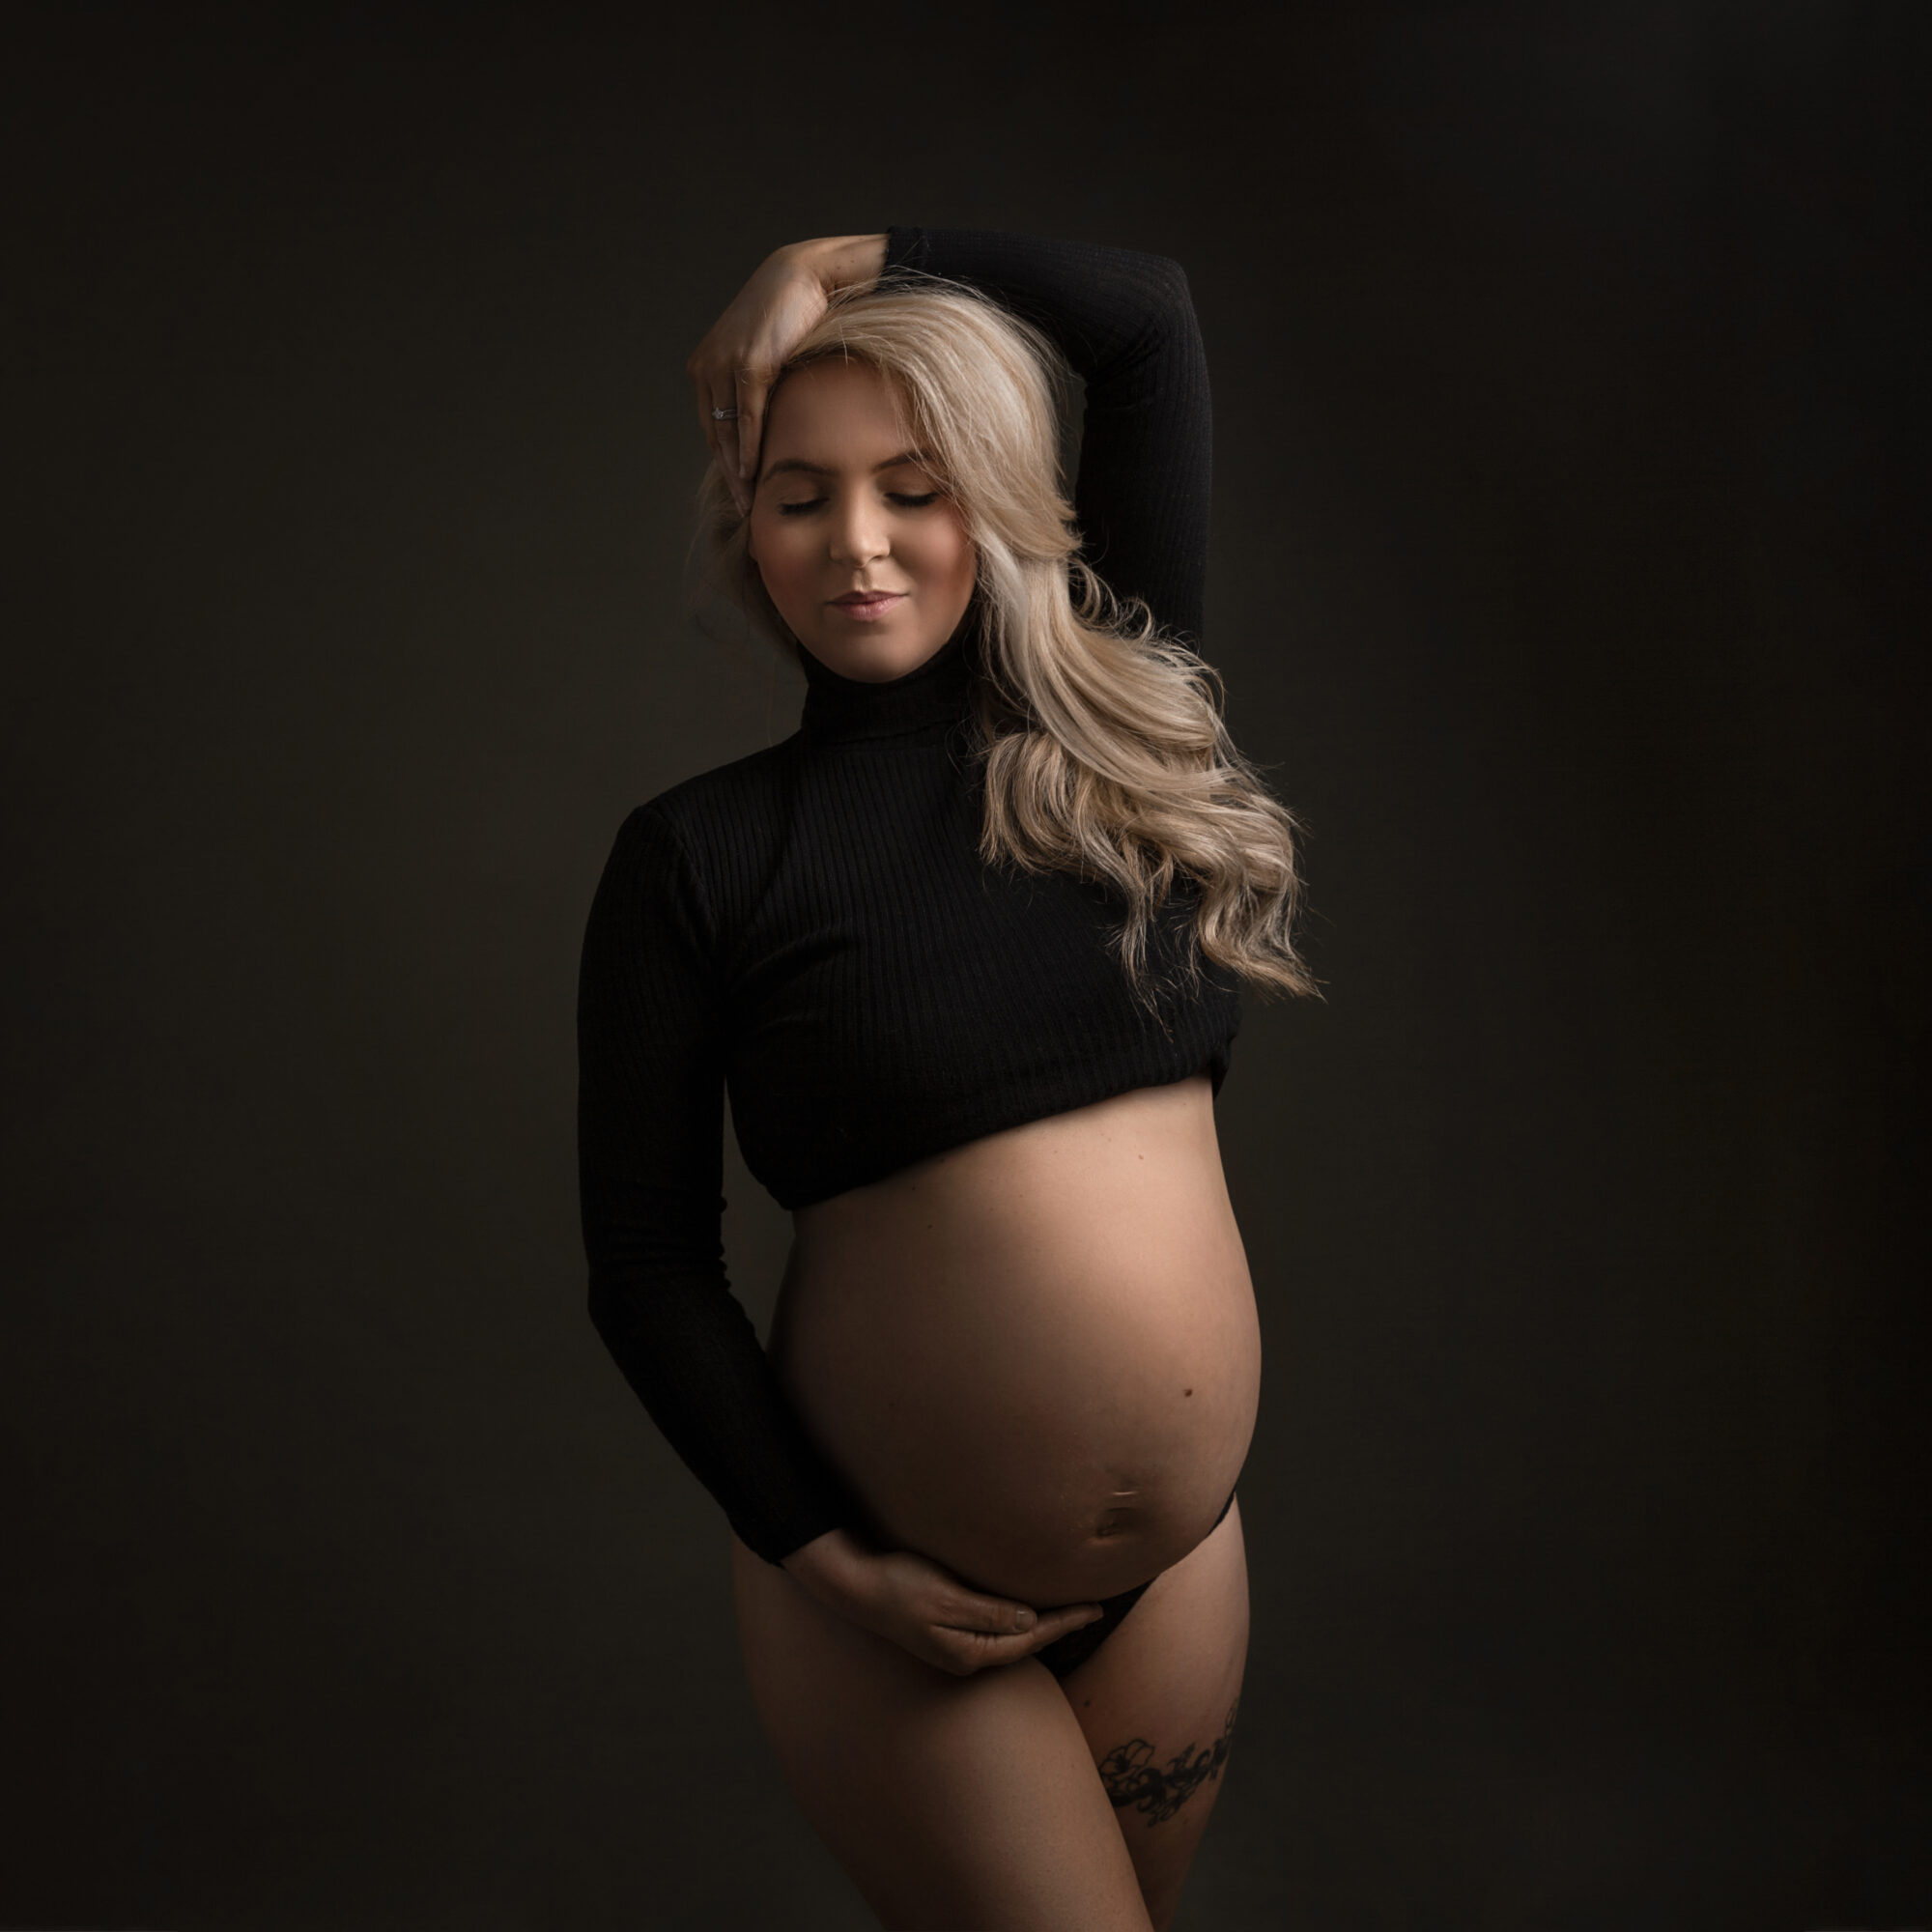 pregnancy photos stockport2